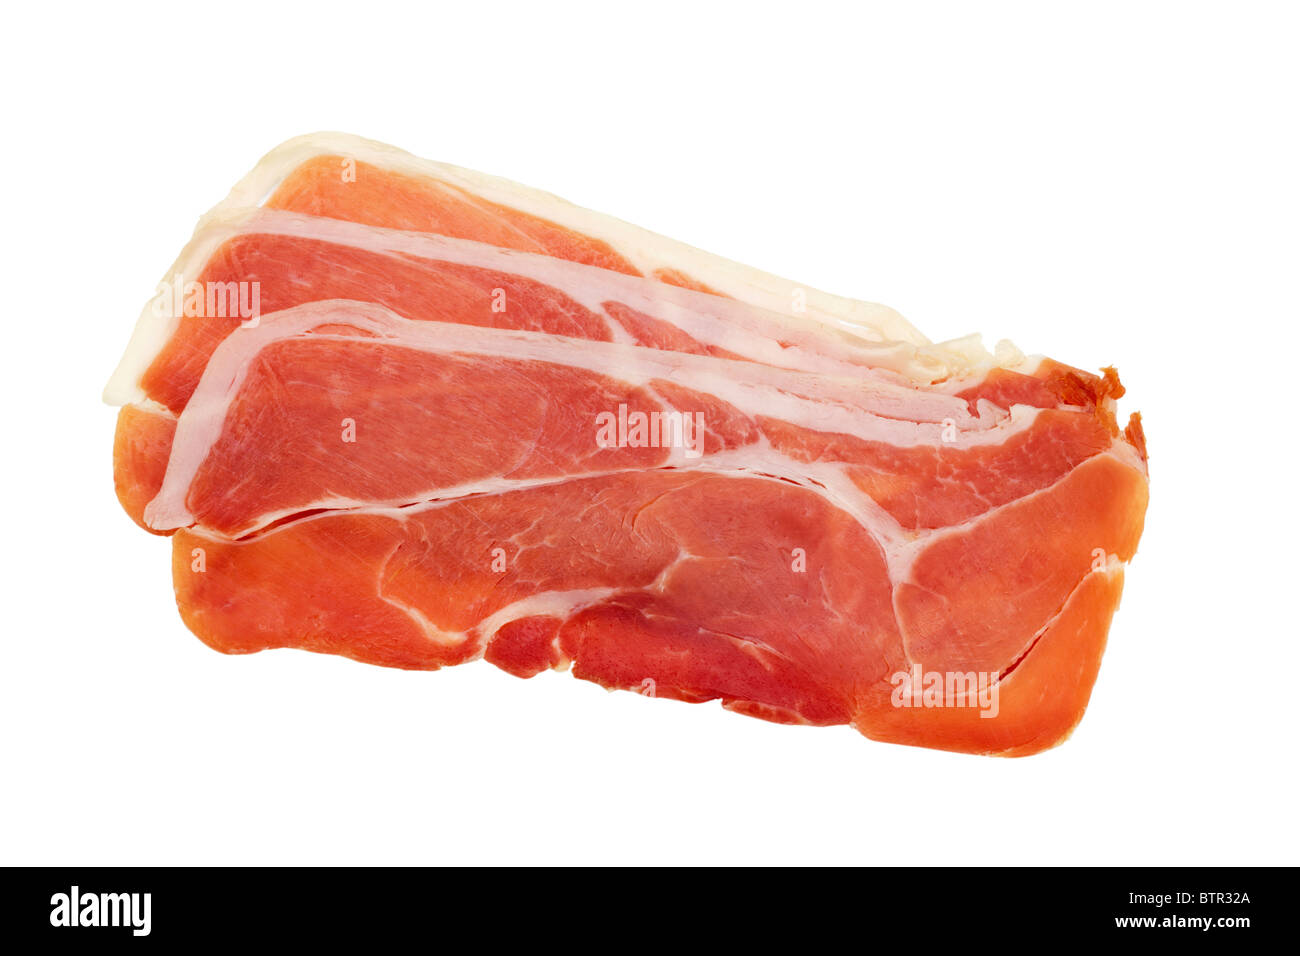 three slices of spanish dry-cured serrano ham Stock Photo